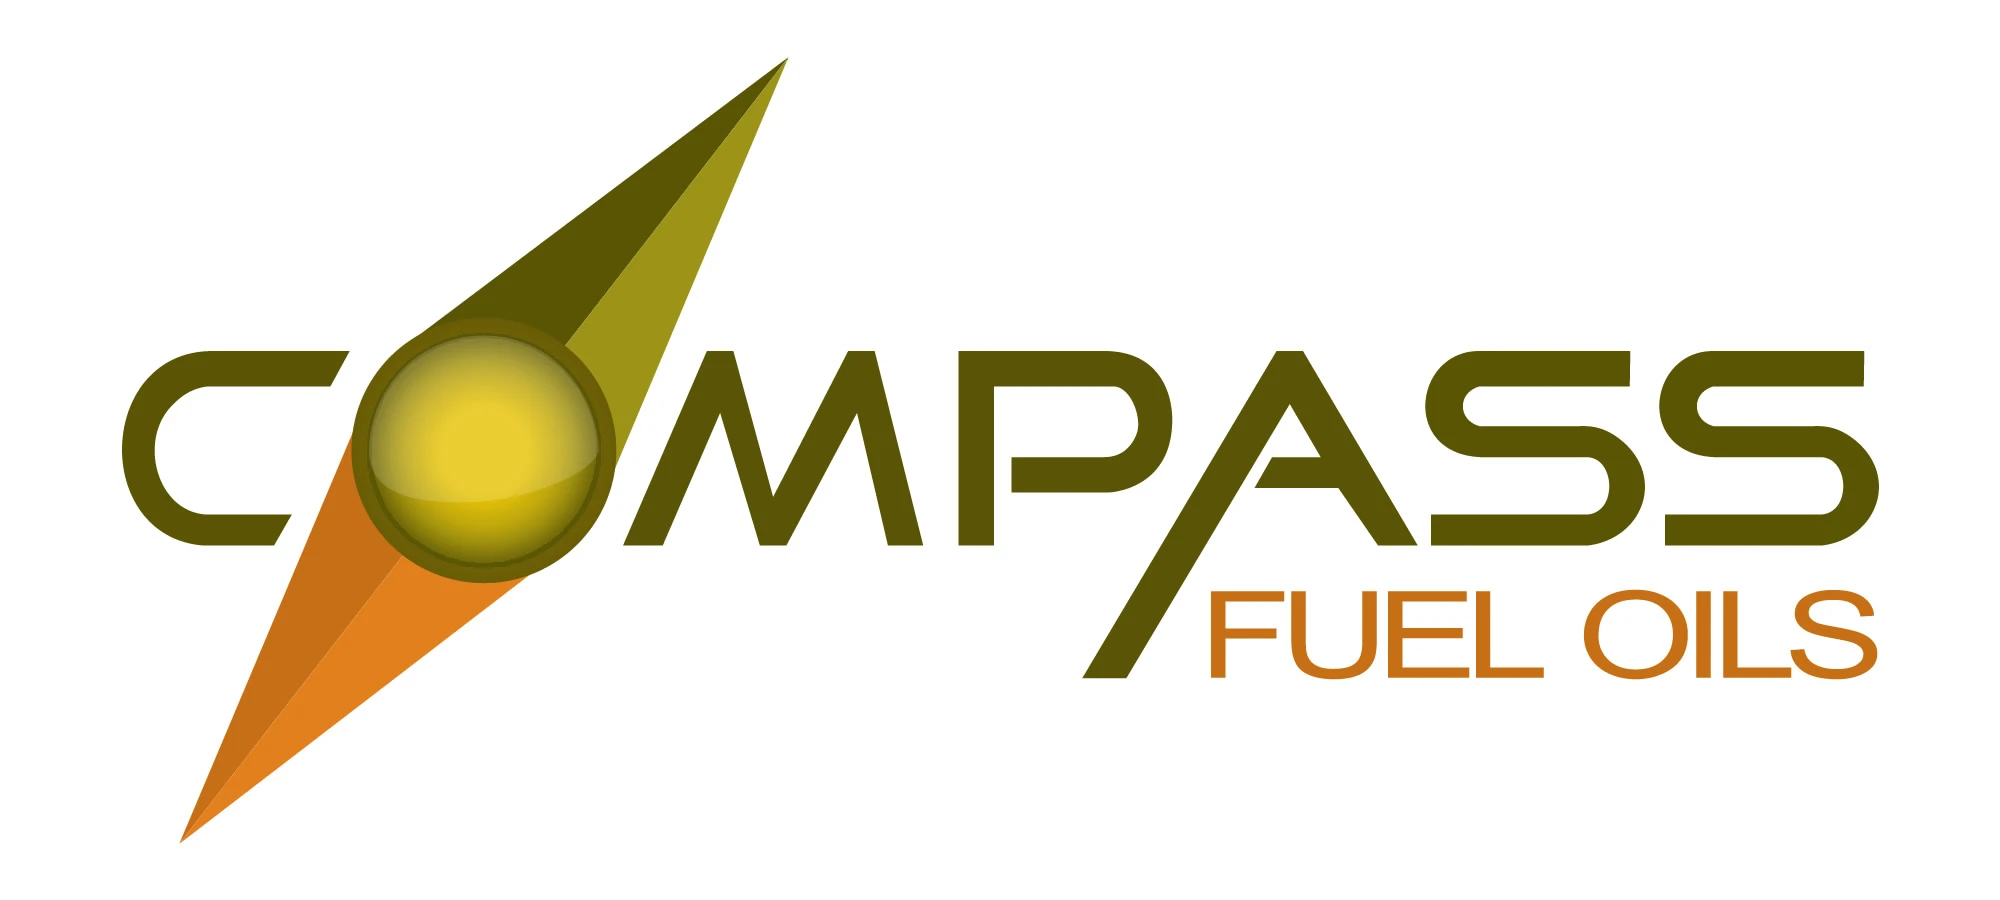 Compass Fuel Oils & Lubricants - Nationwide Fuel Supplier Logo